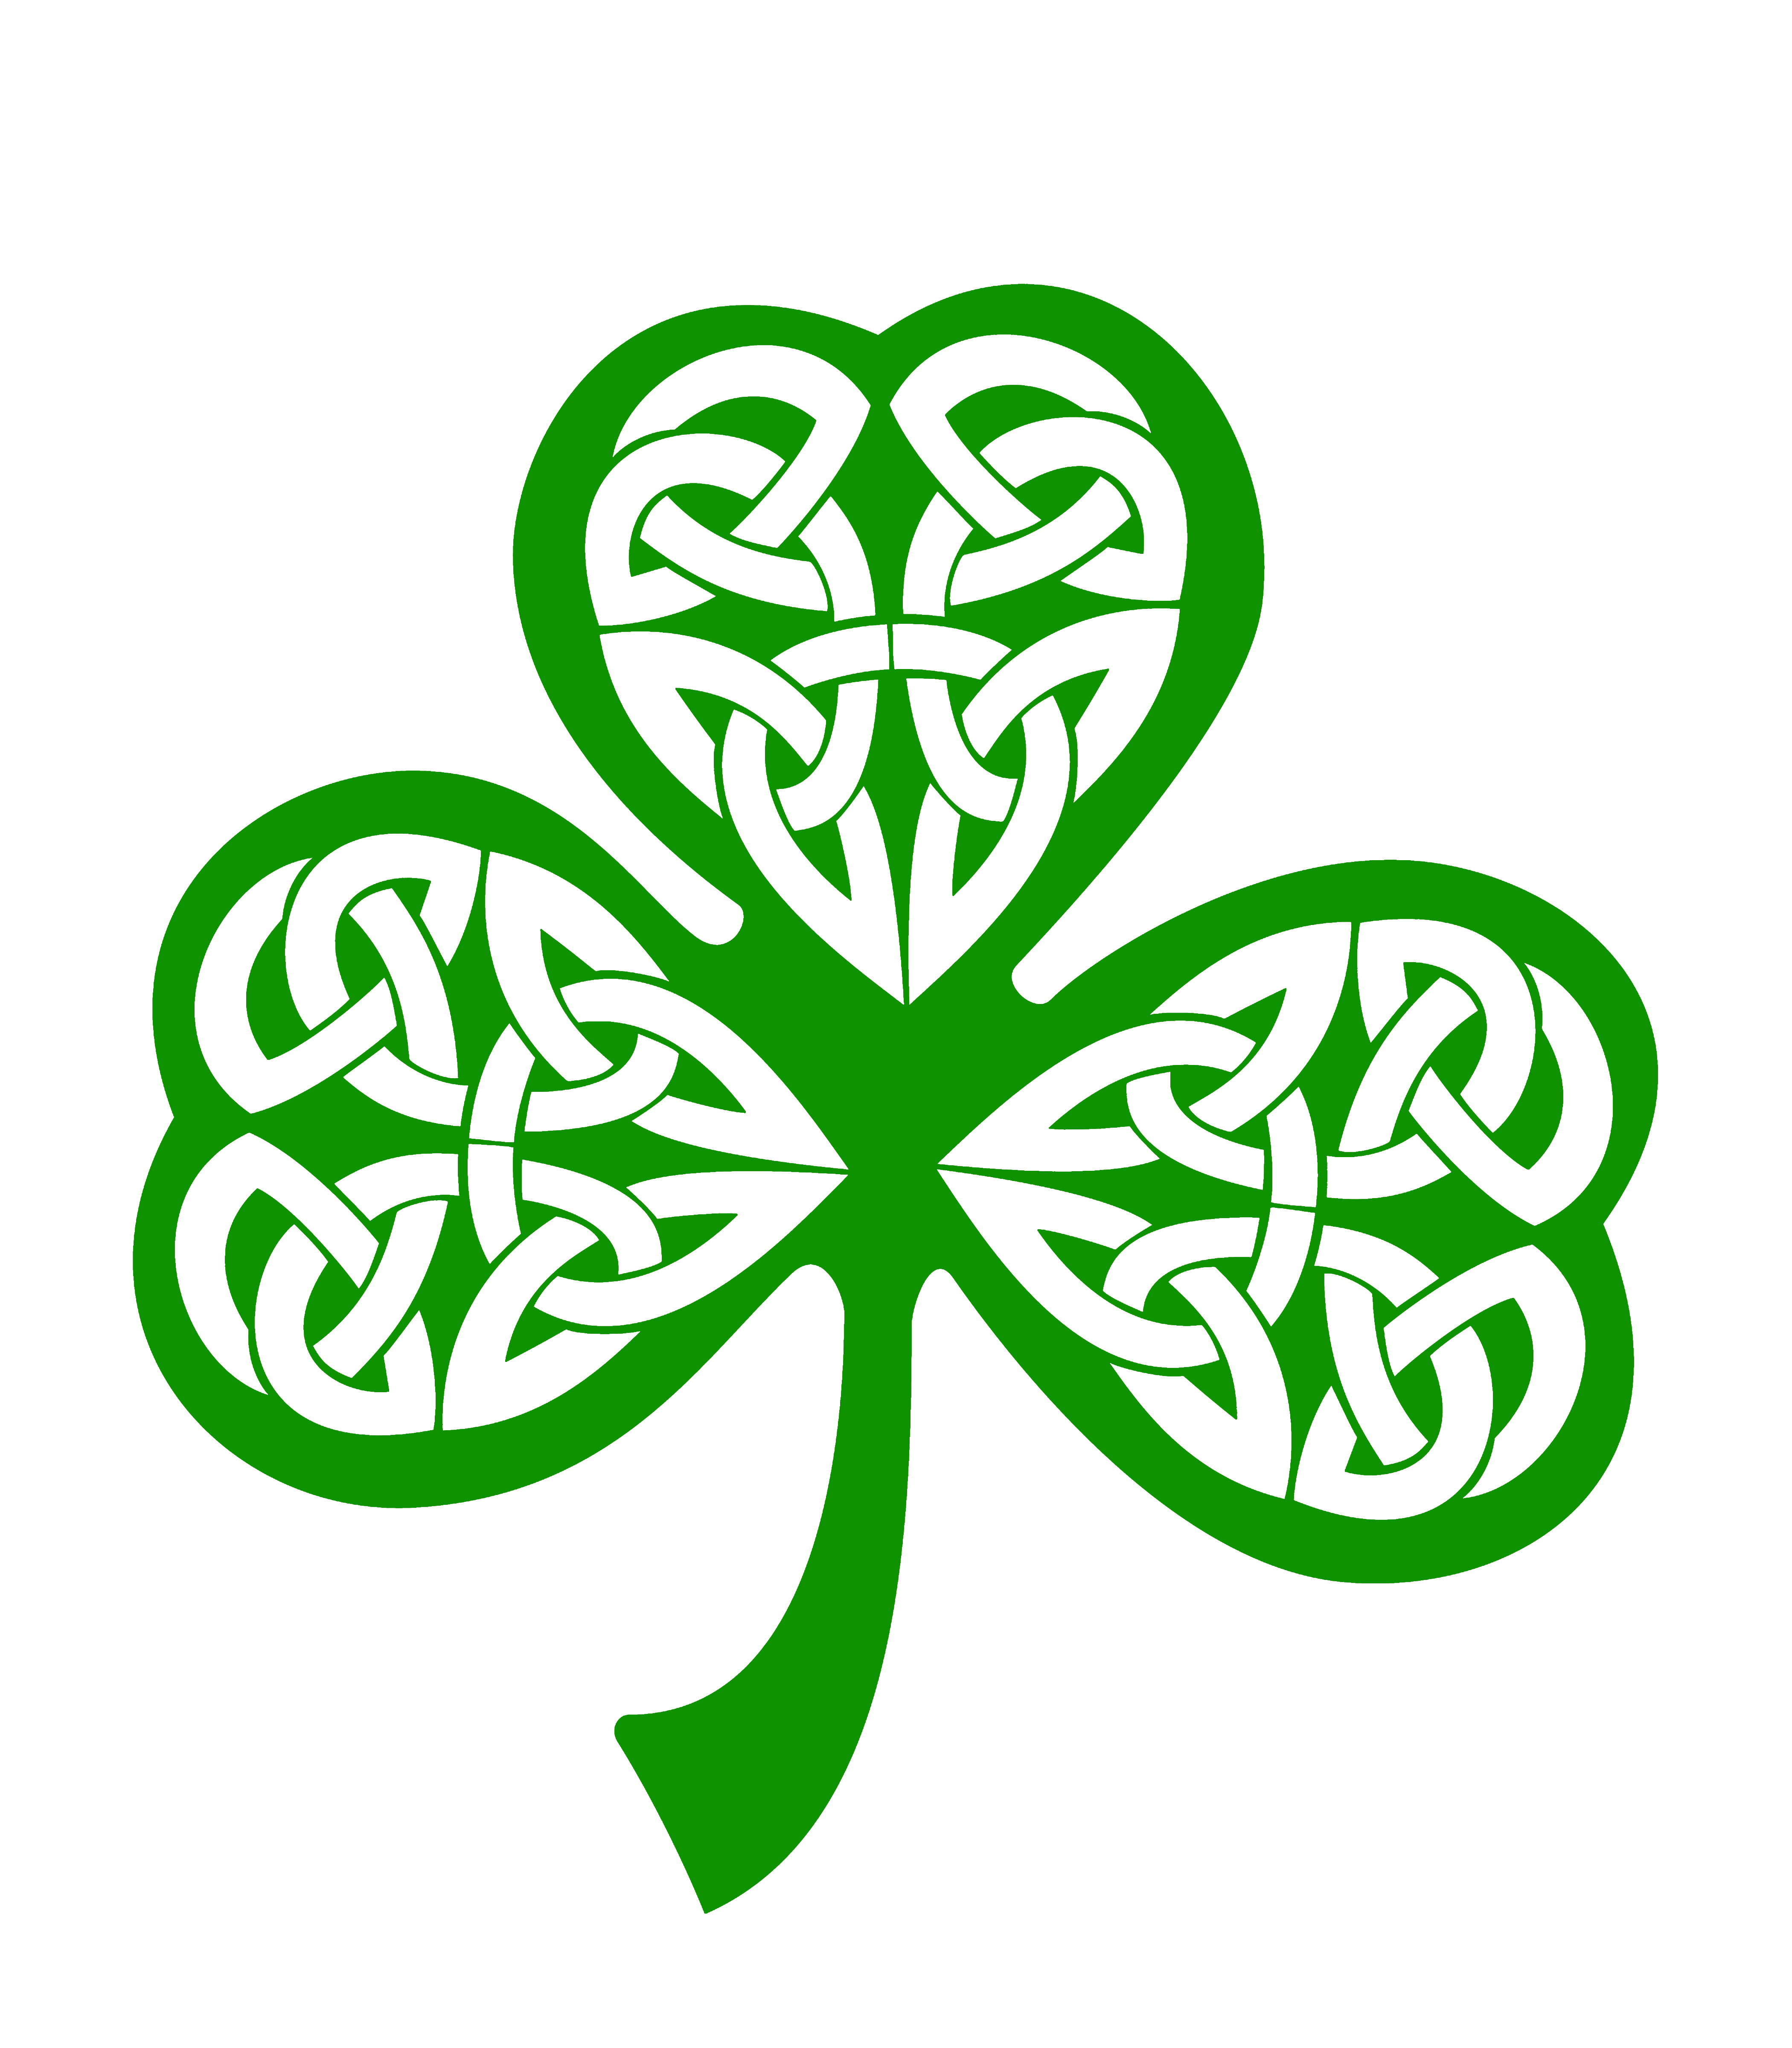 Celtic infinity symbol green clipart